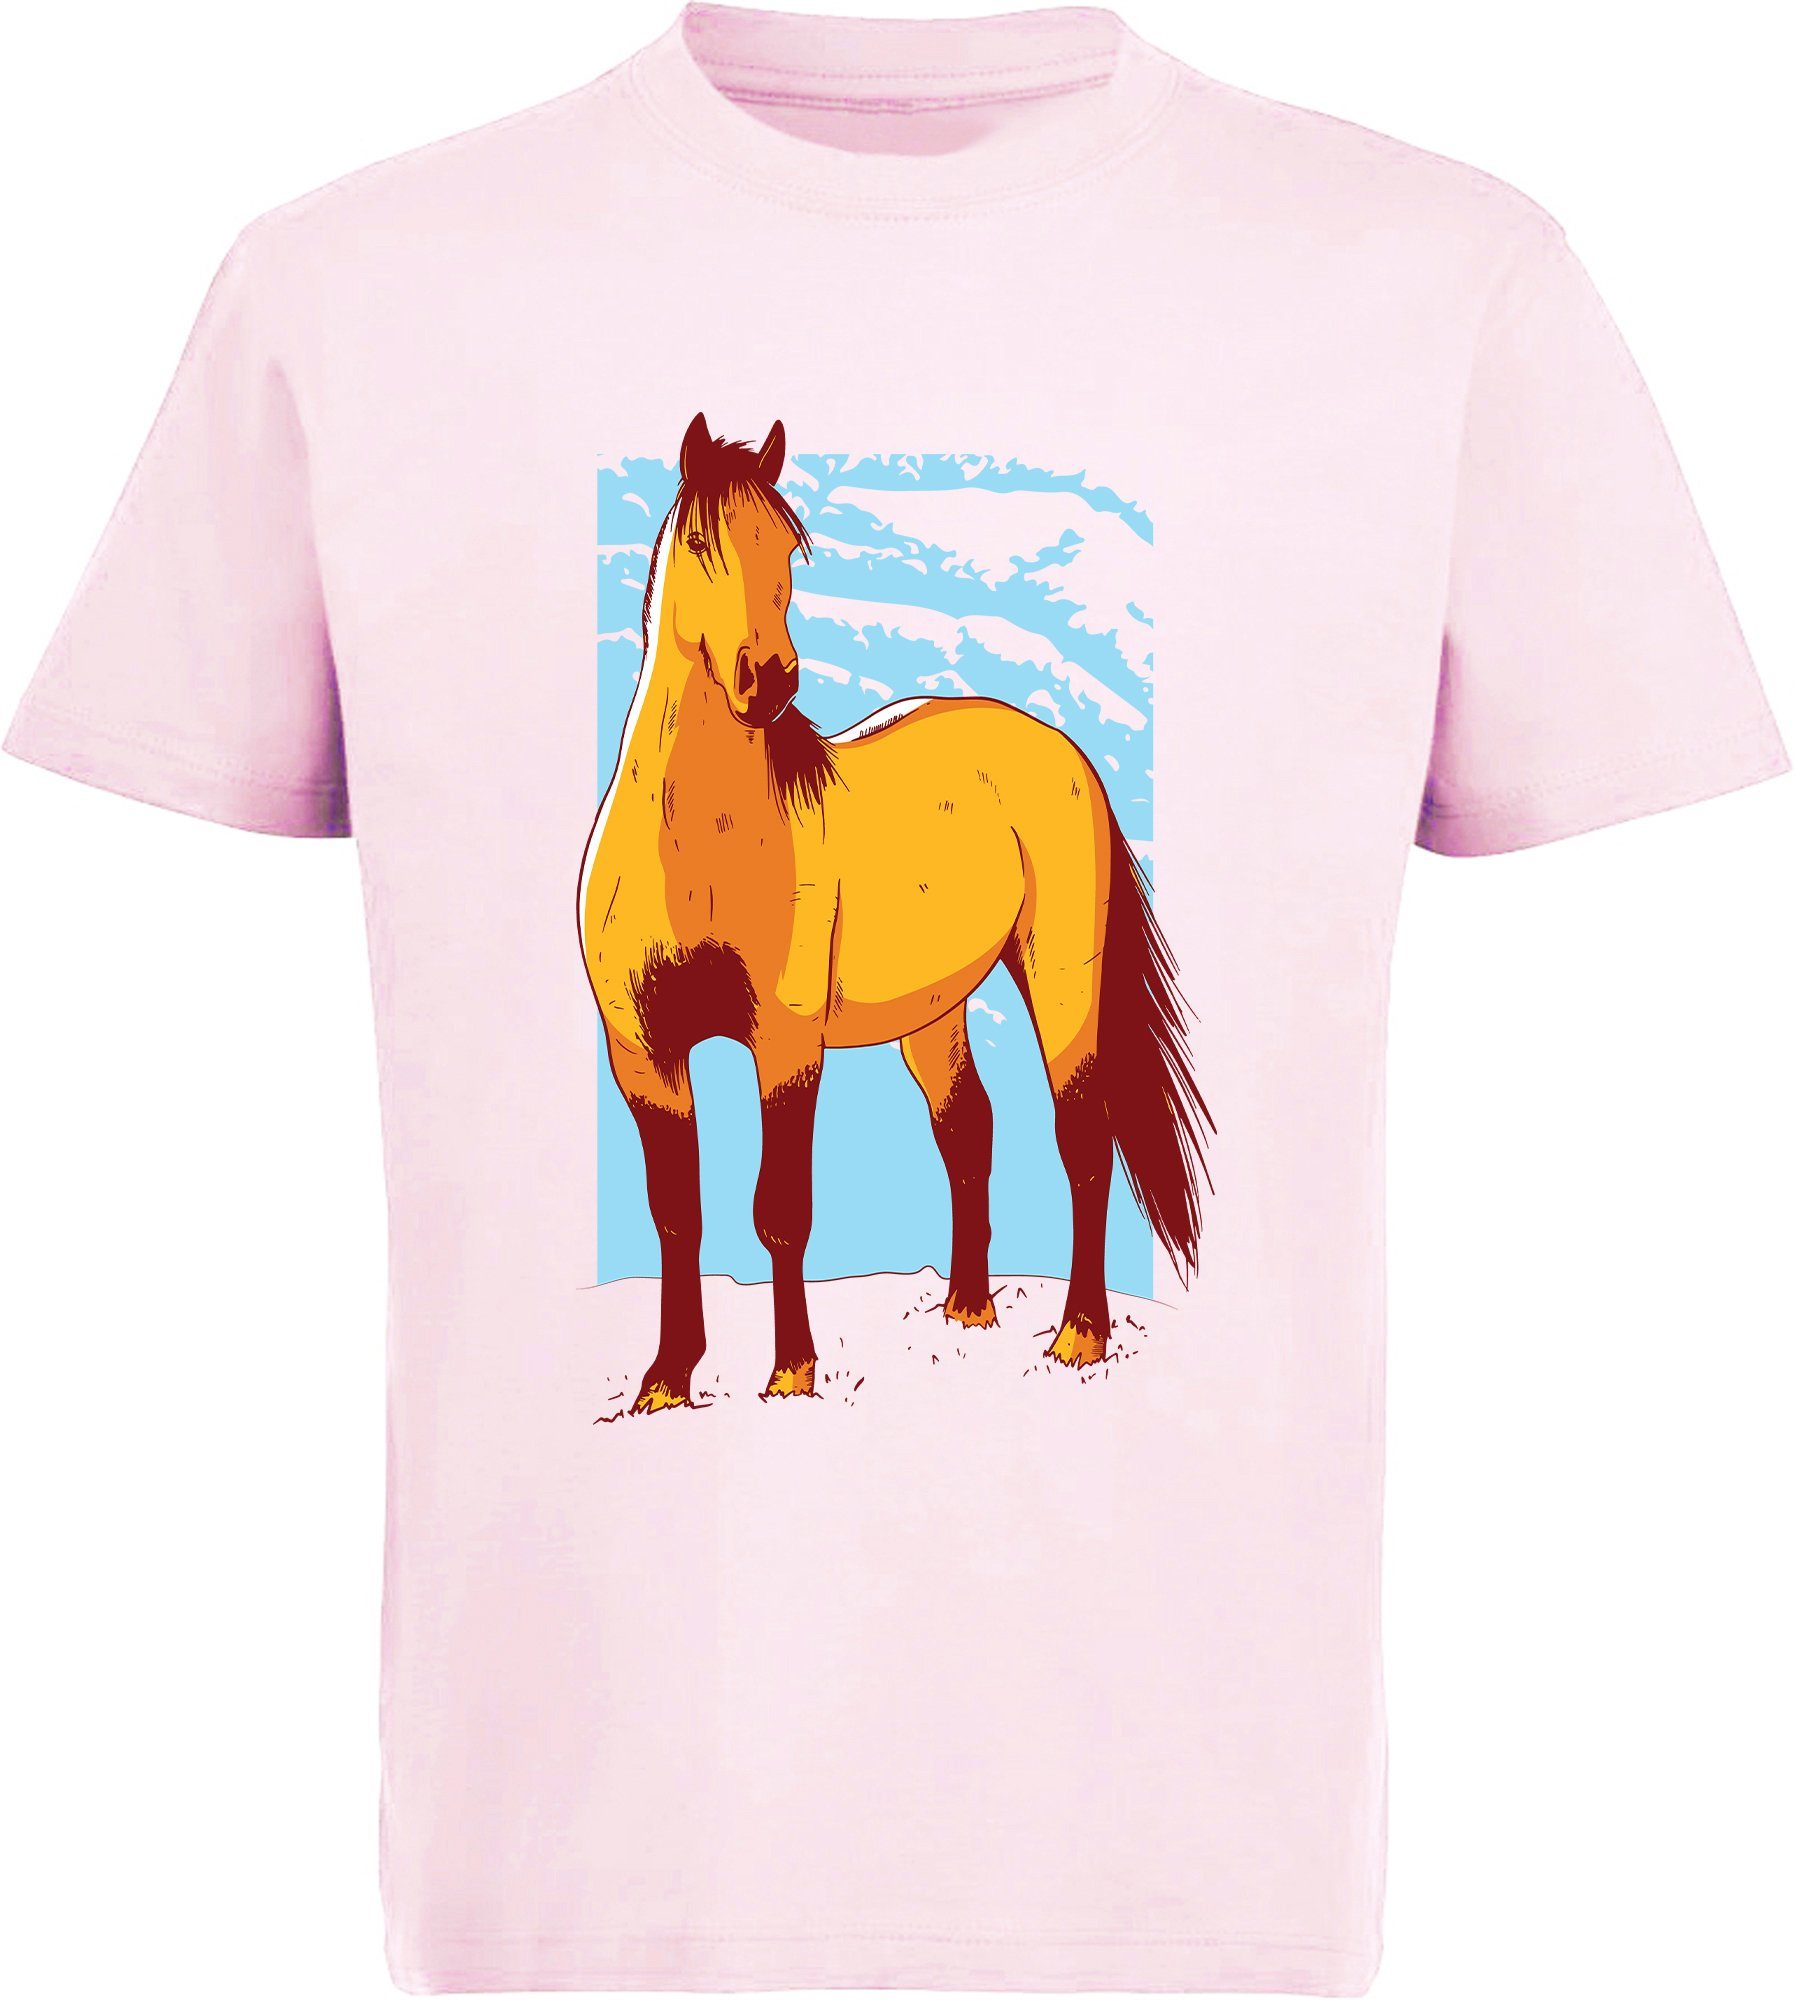 Print-Shirt rosa mit Aufdruck, Baumwollshirt bedrucktes Pferd i155 elegantes Mädchen T-Shirt MyDesign24